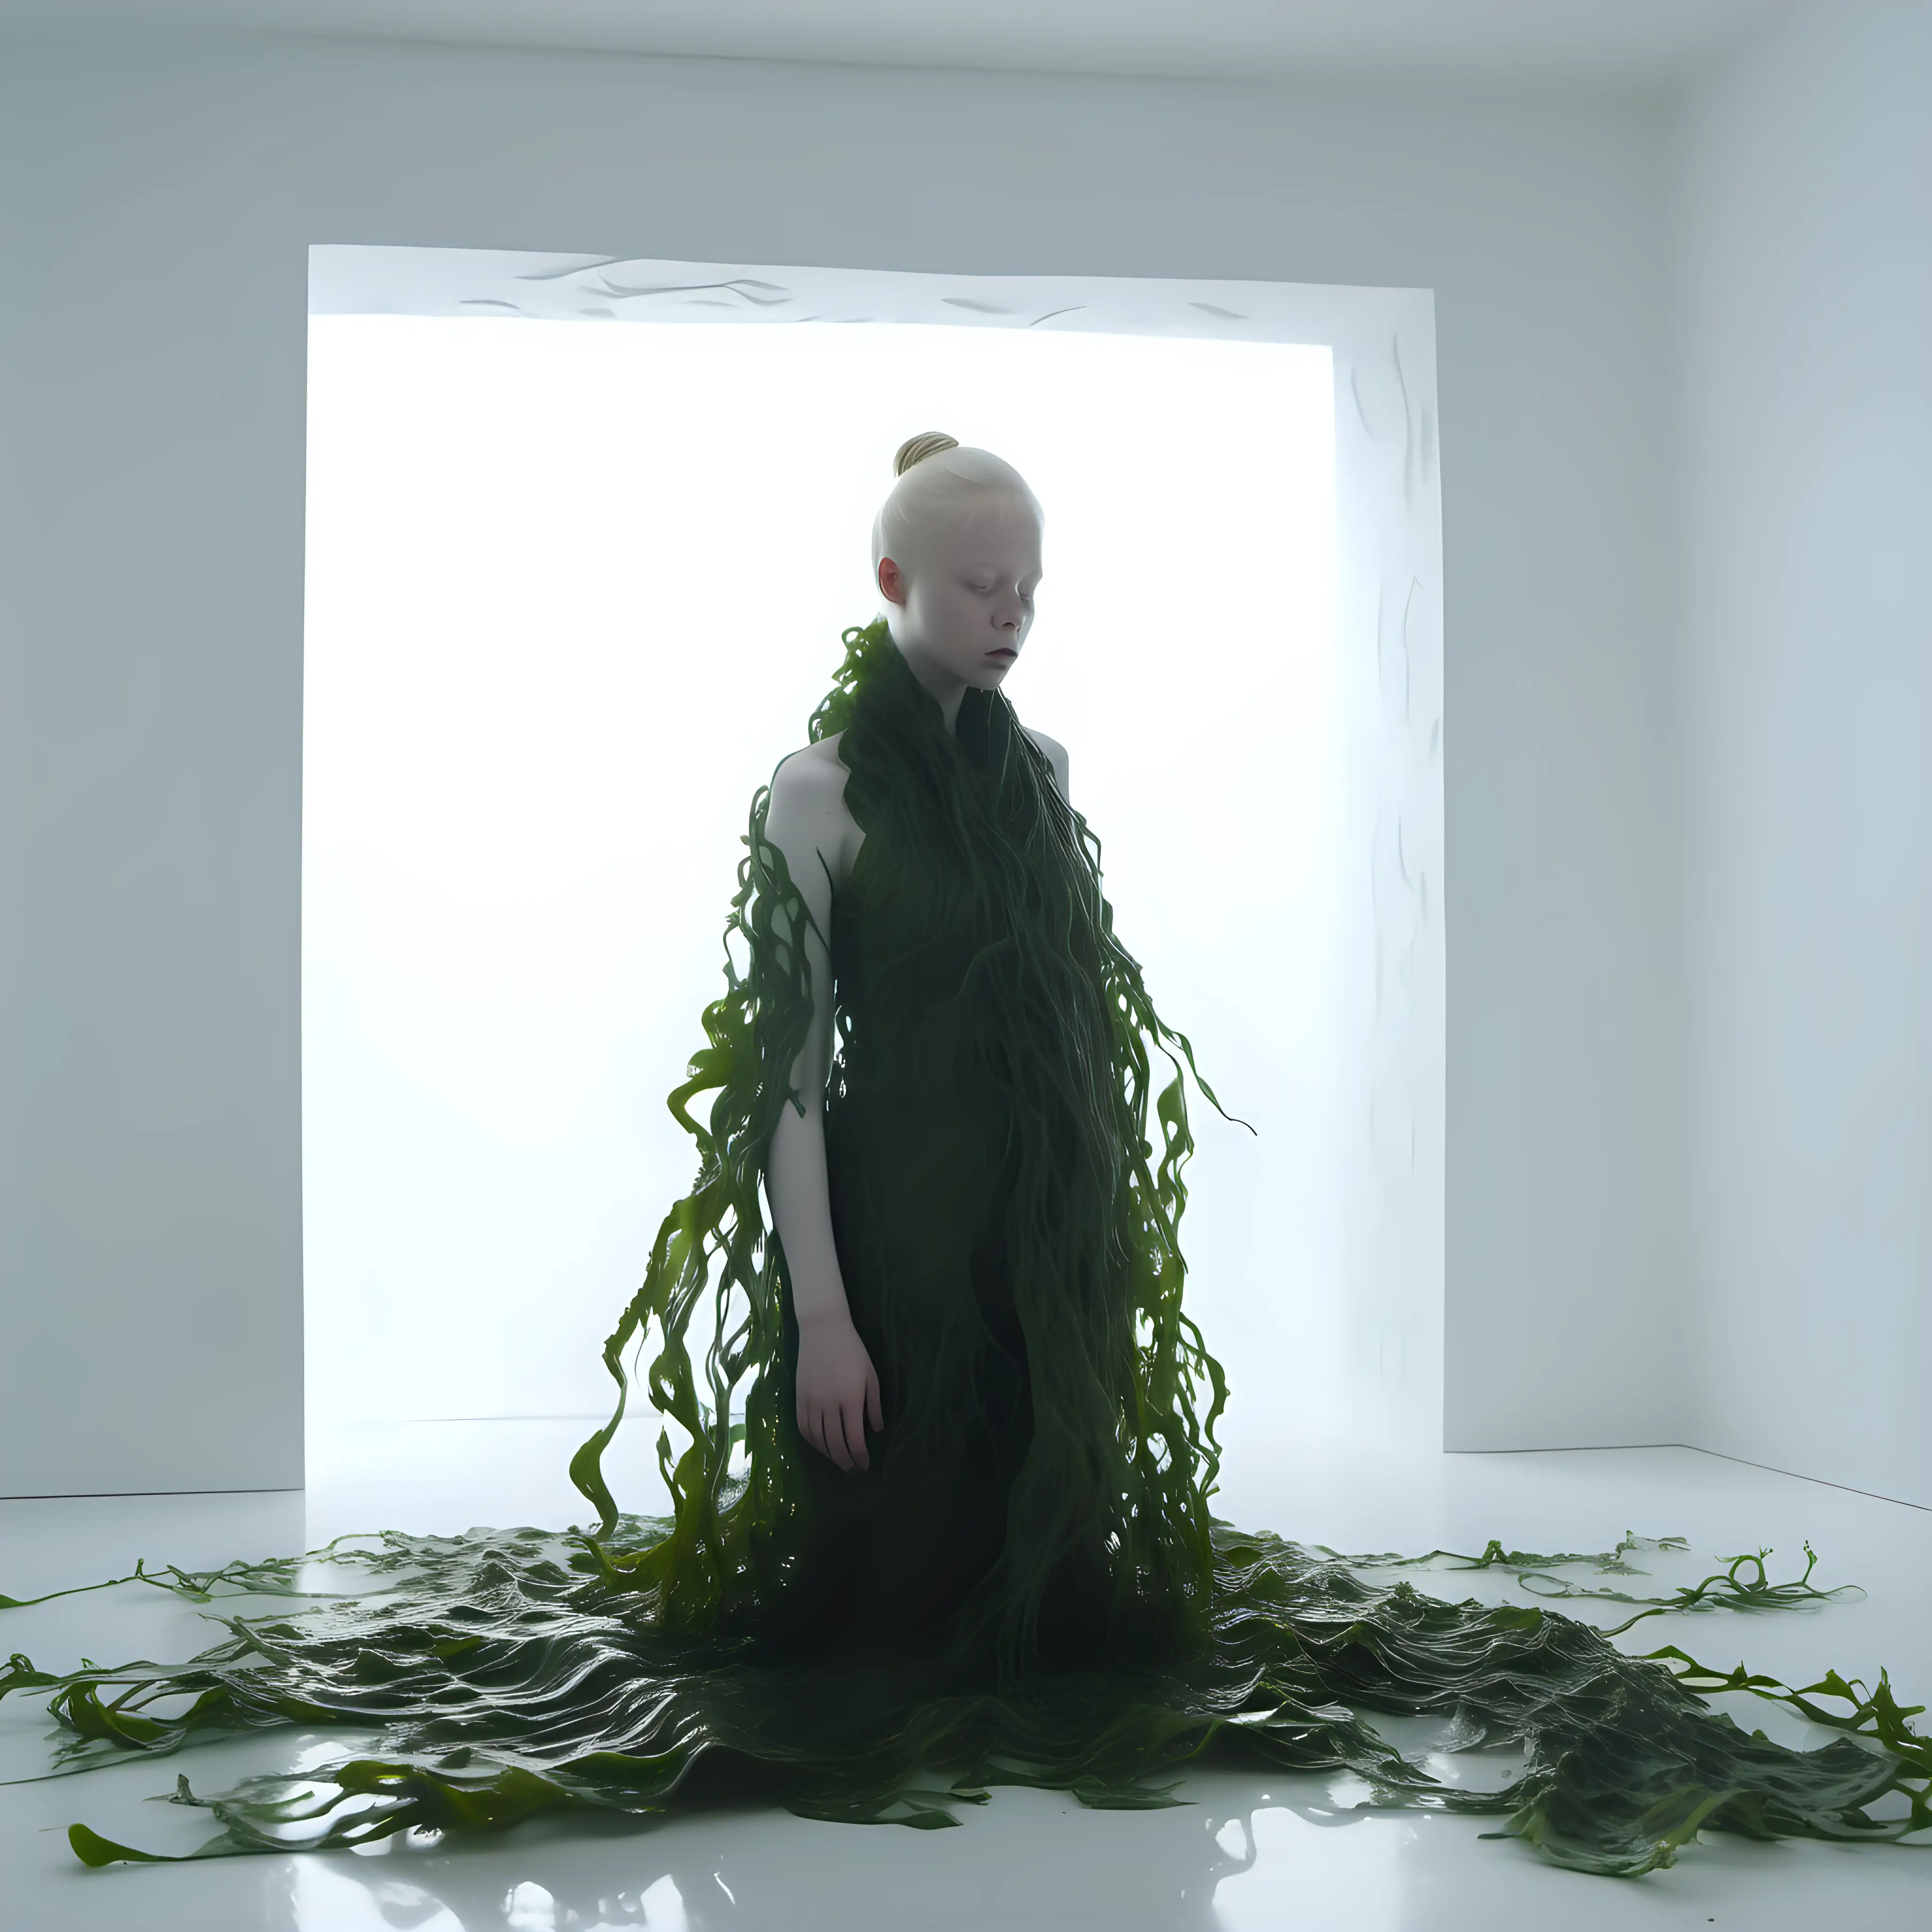 Enchanting Albino Girl Embraced by Kelp Algae Seaweeds in a Minimalist White Room with Theatrical Lighting 8K VR 52